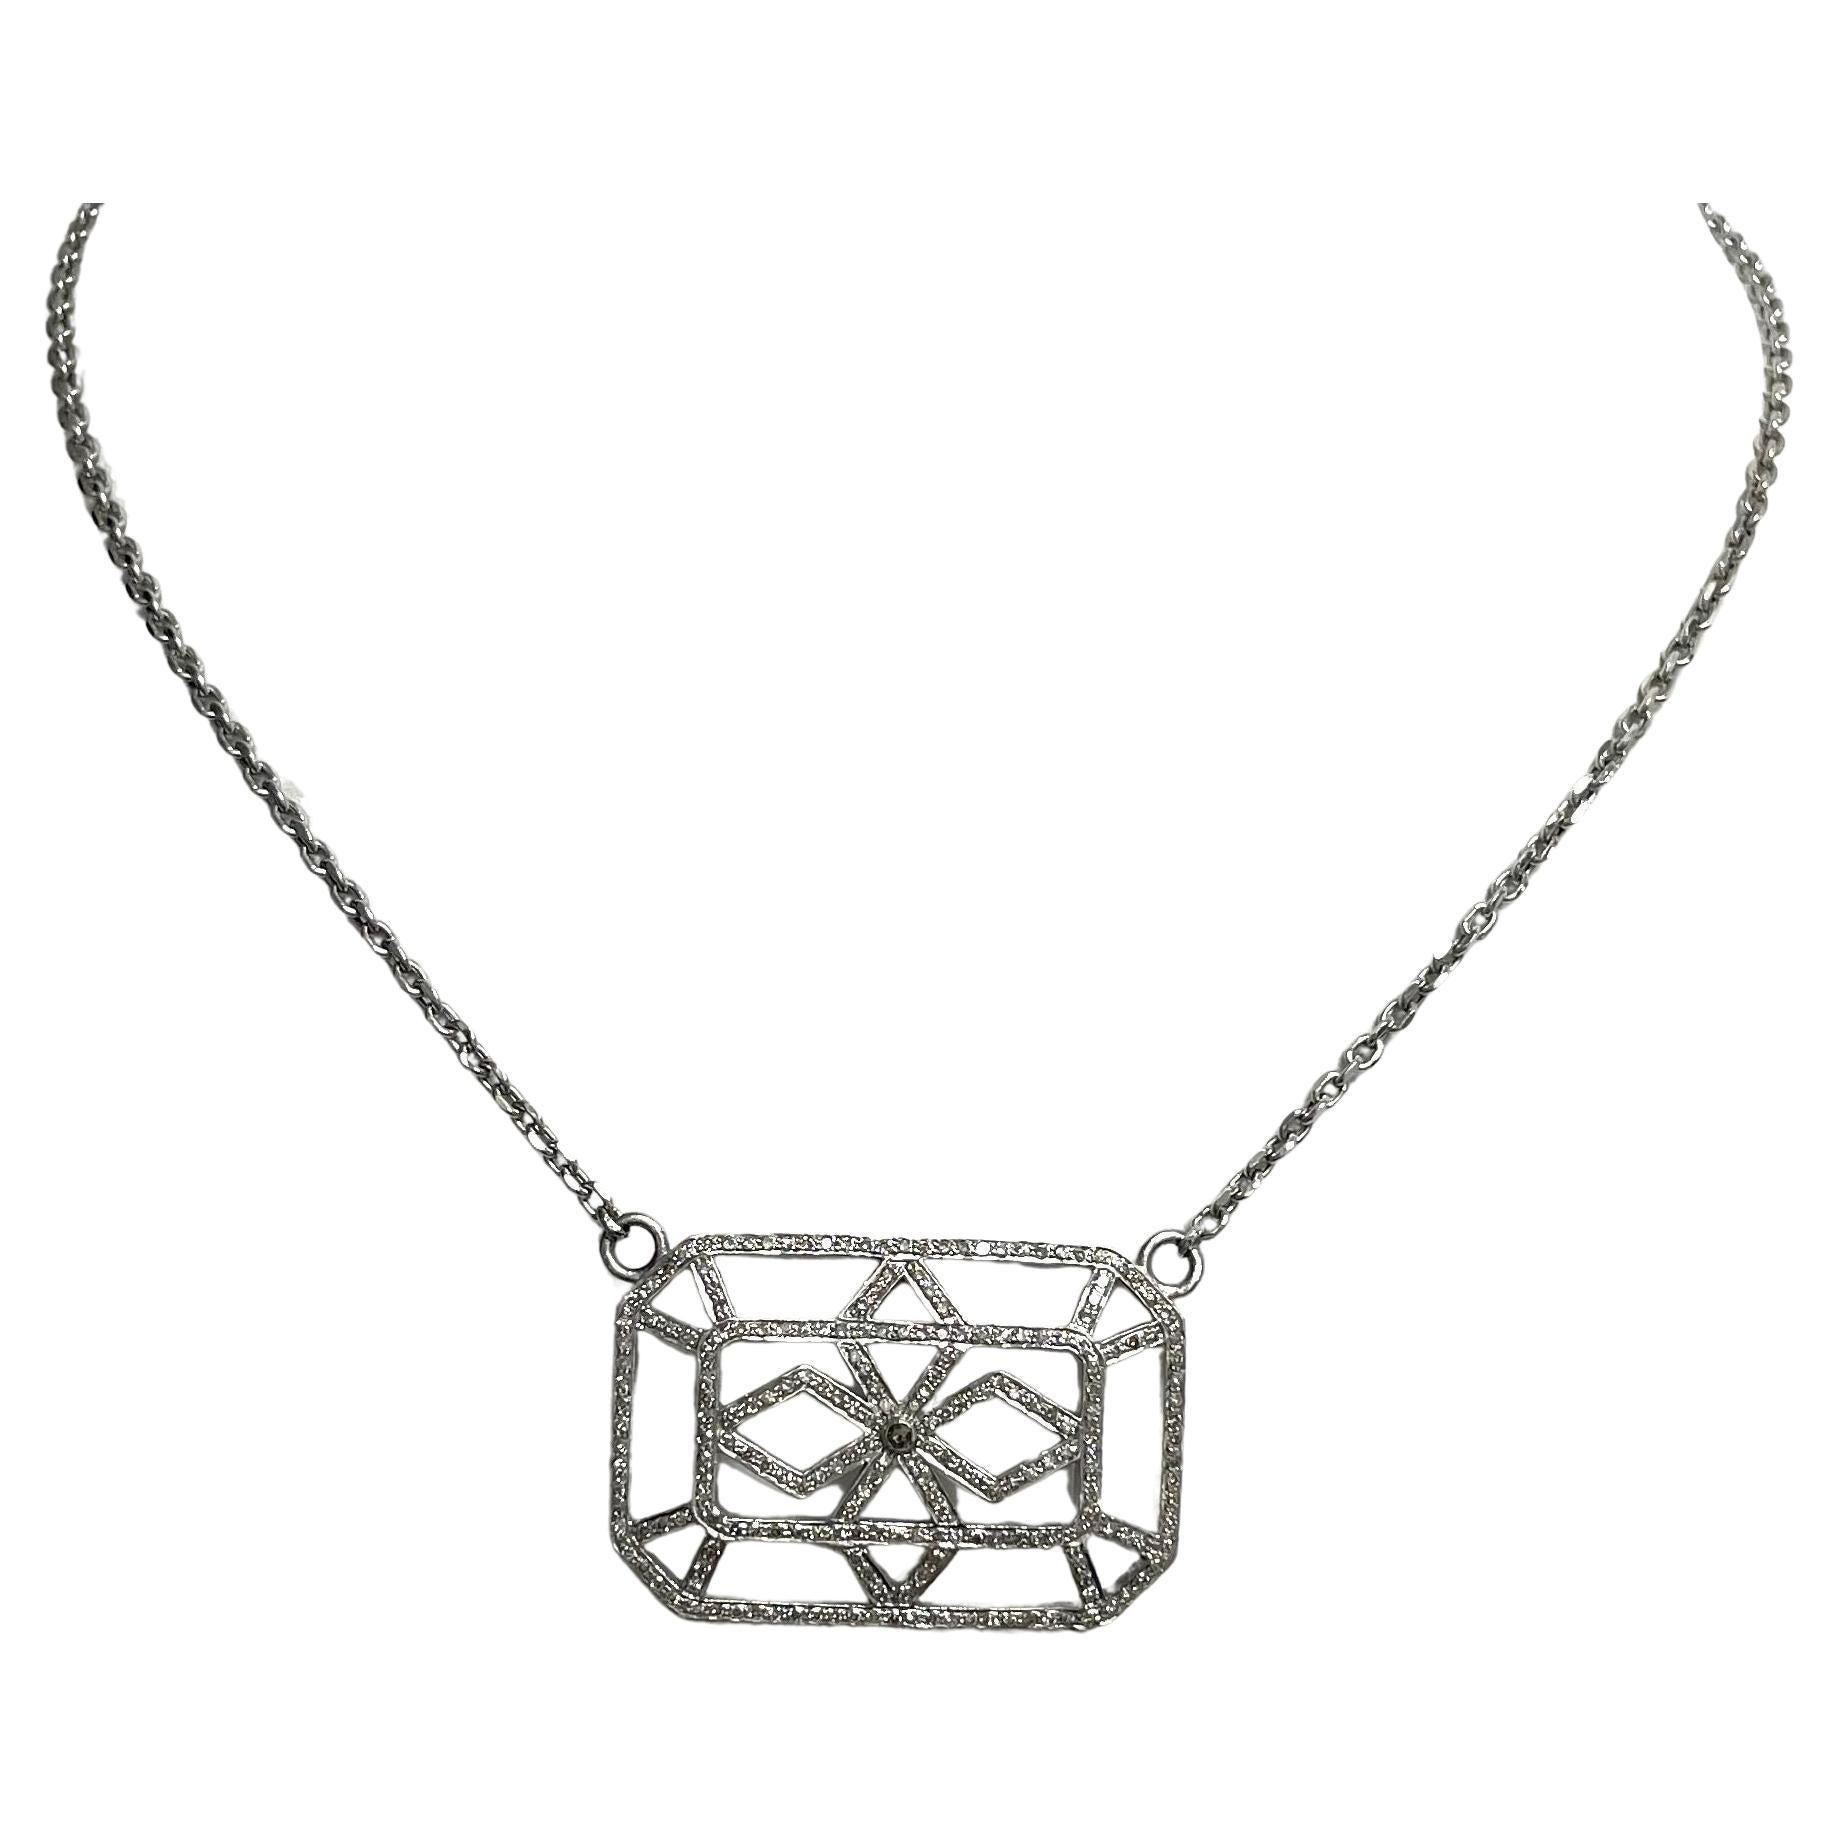 Pave Diamond Rectangular Pendant On White Gold Chain Necklace